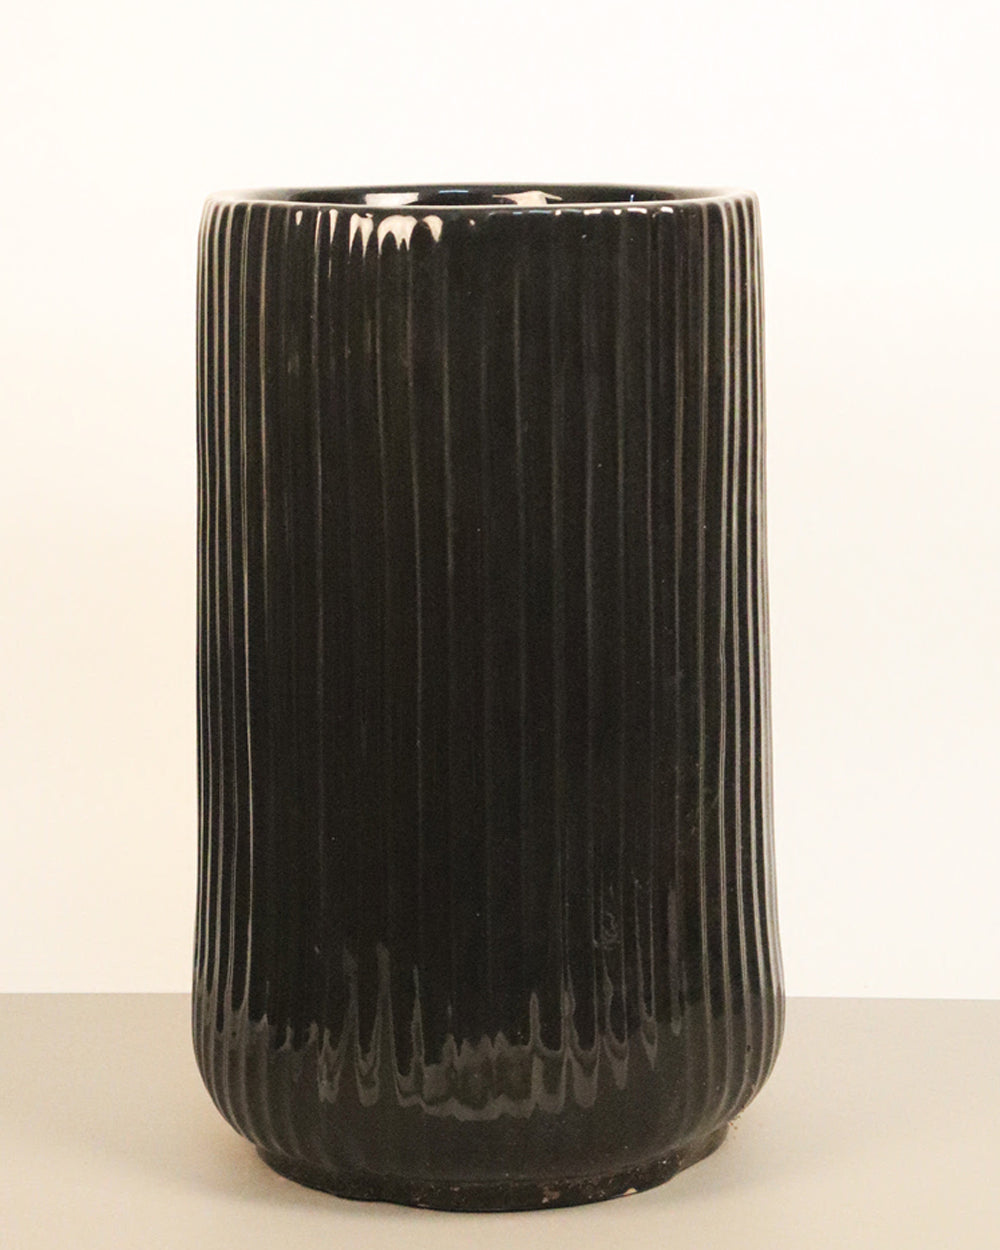 Tall size Pheonix Ceramic planter in Black color